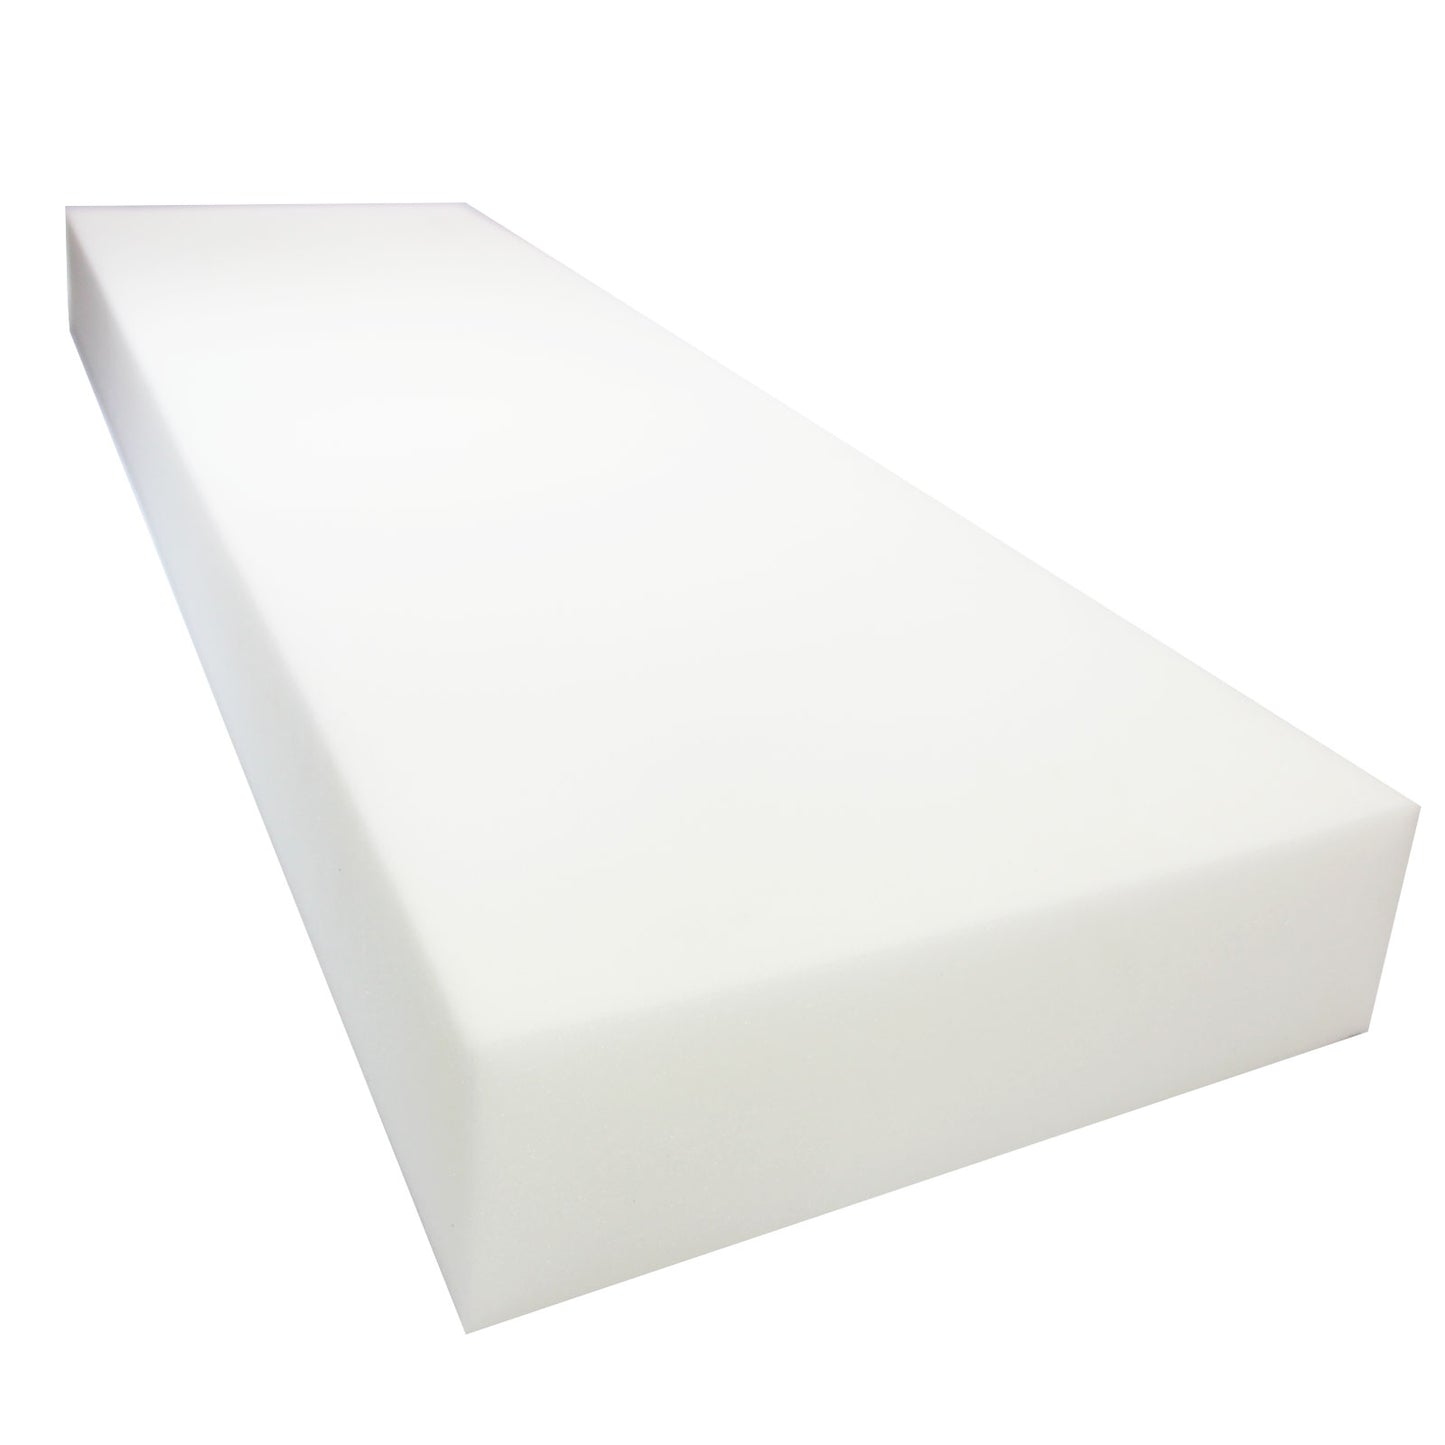 FoamTouch Upholstery Foam 2 x 24 x 72 High Density Cushion, white